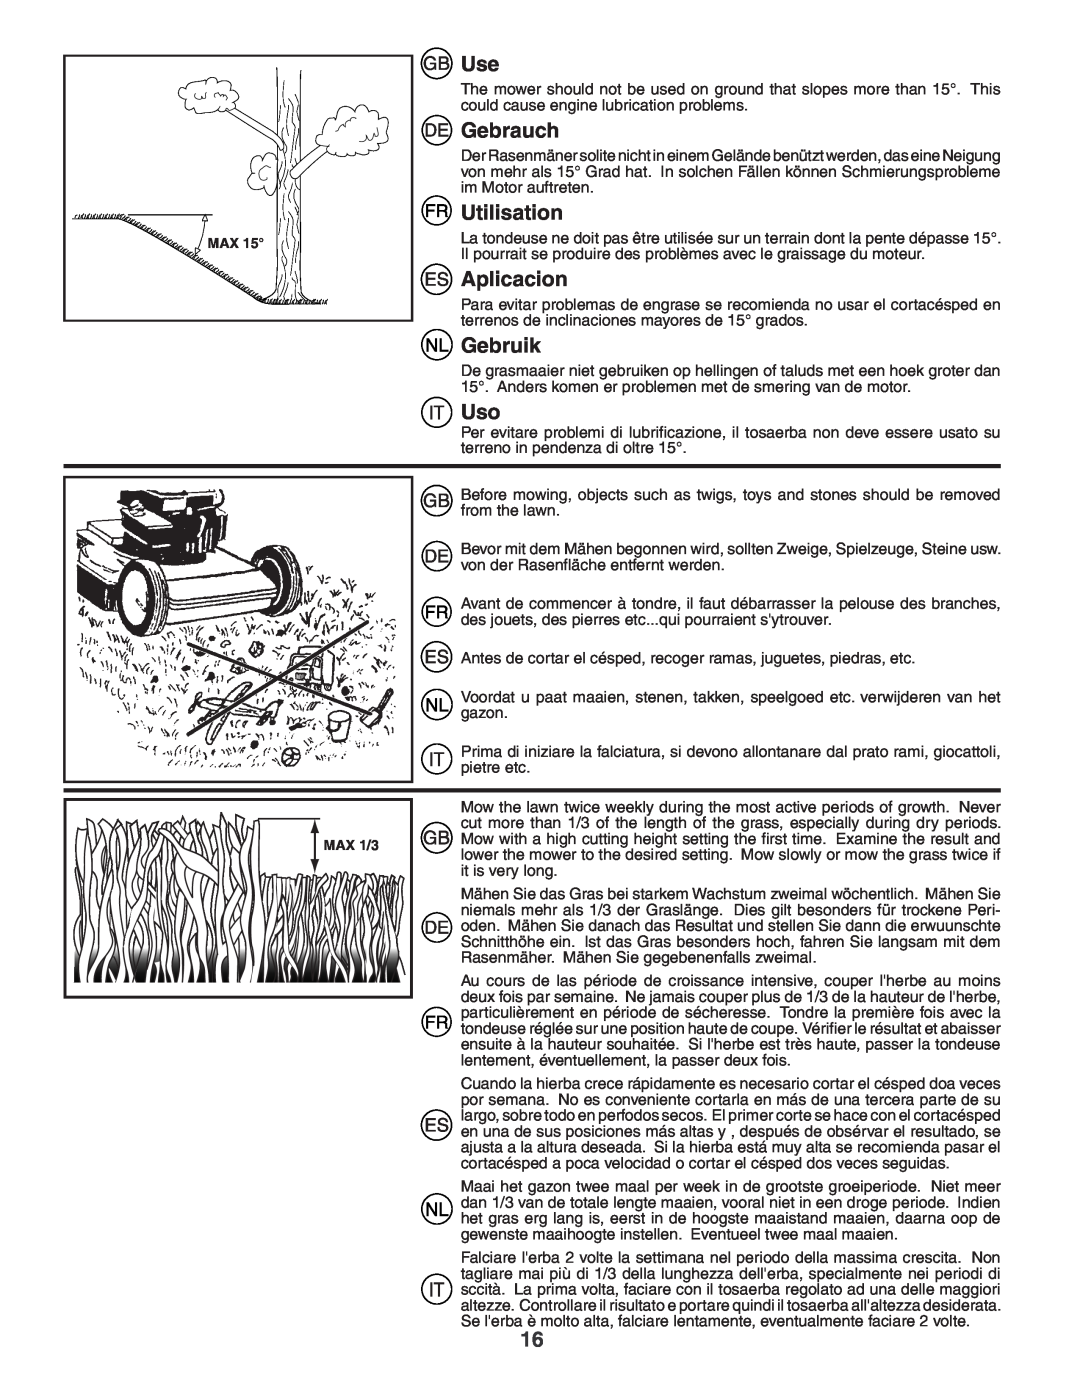 Husqvarna J50S instruction manual Gebrauch, Utilisation, Aplicacion, Gebruik 